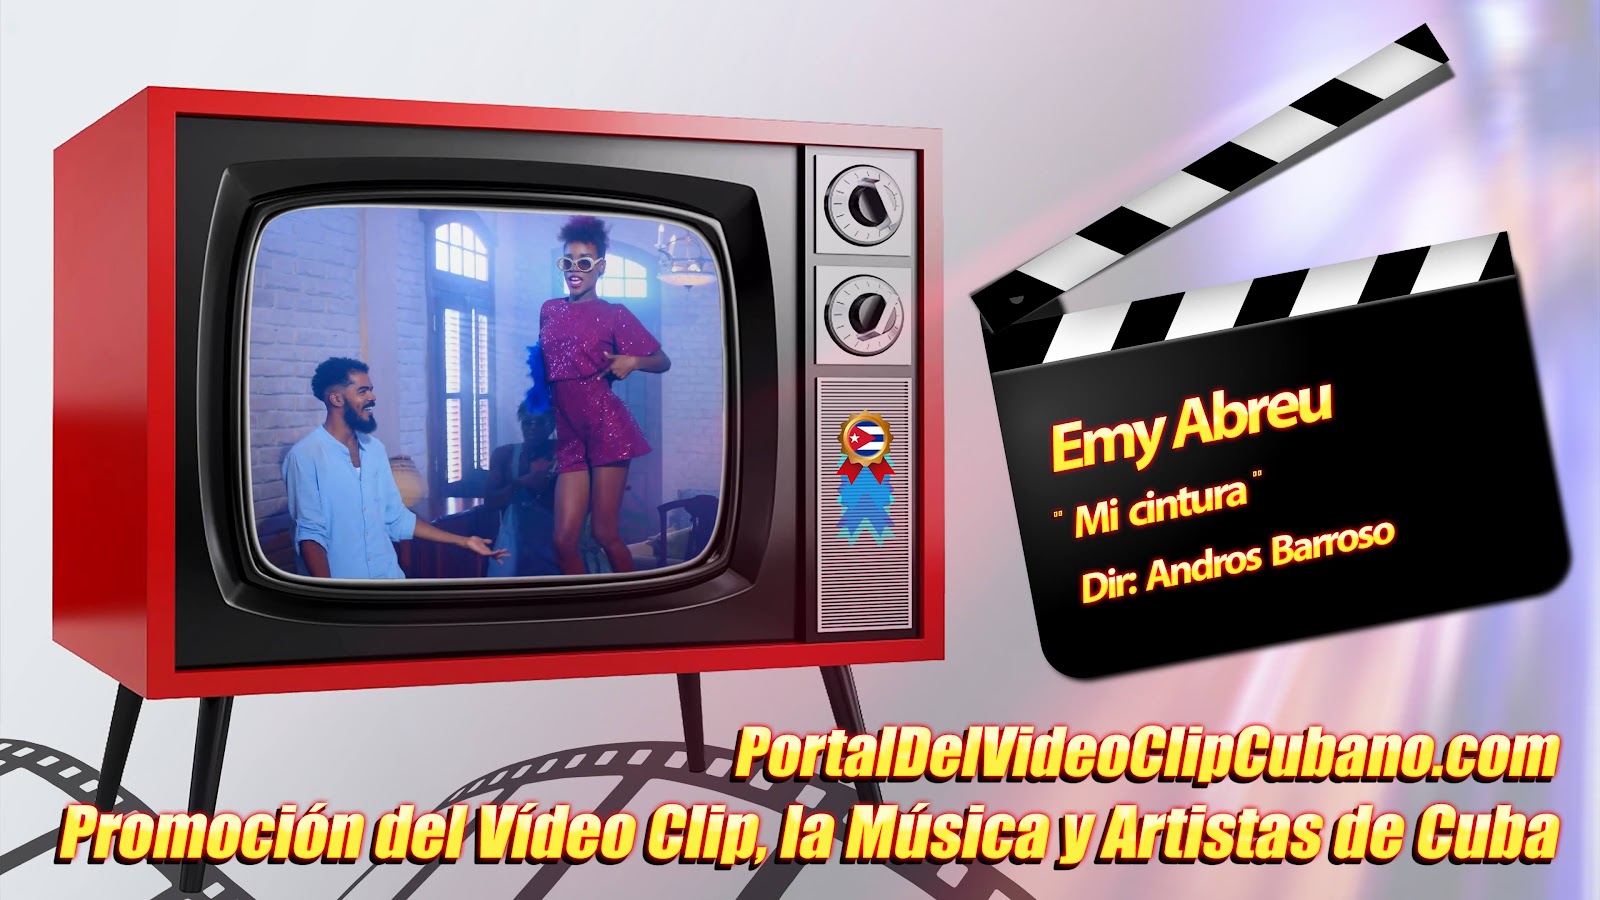 Emy Abreu - ¨Mi cintura¨ - Director: Andros Barroso. Portal Del Vídeo Clip Cubano. Música Popular Bailable Cubana. Canción. CUBA.